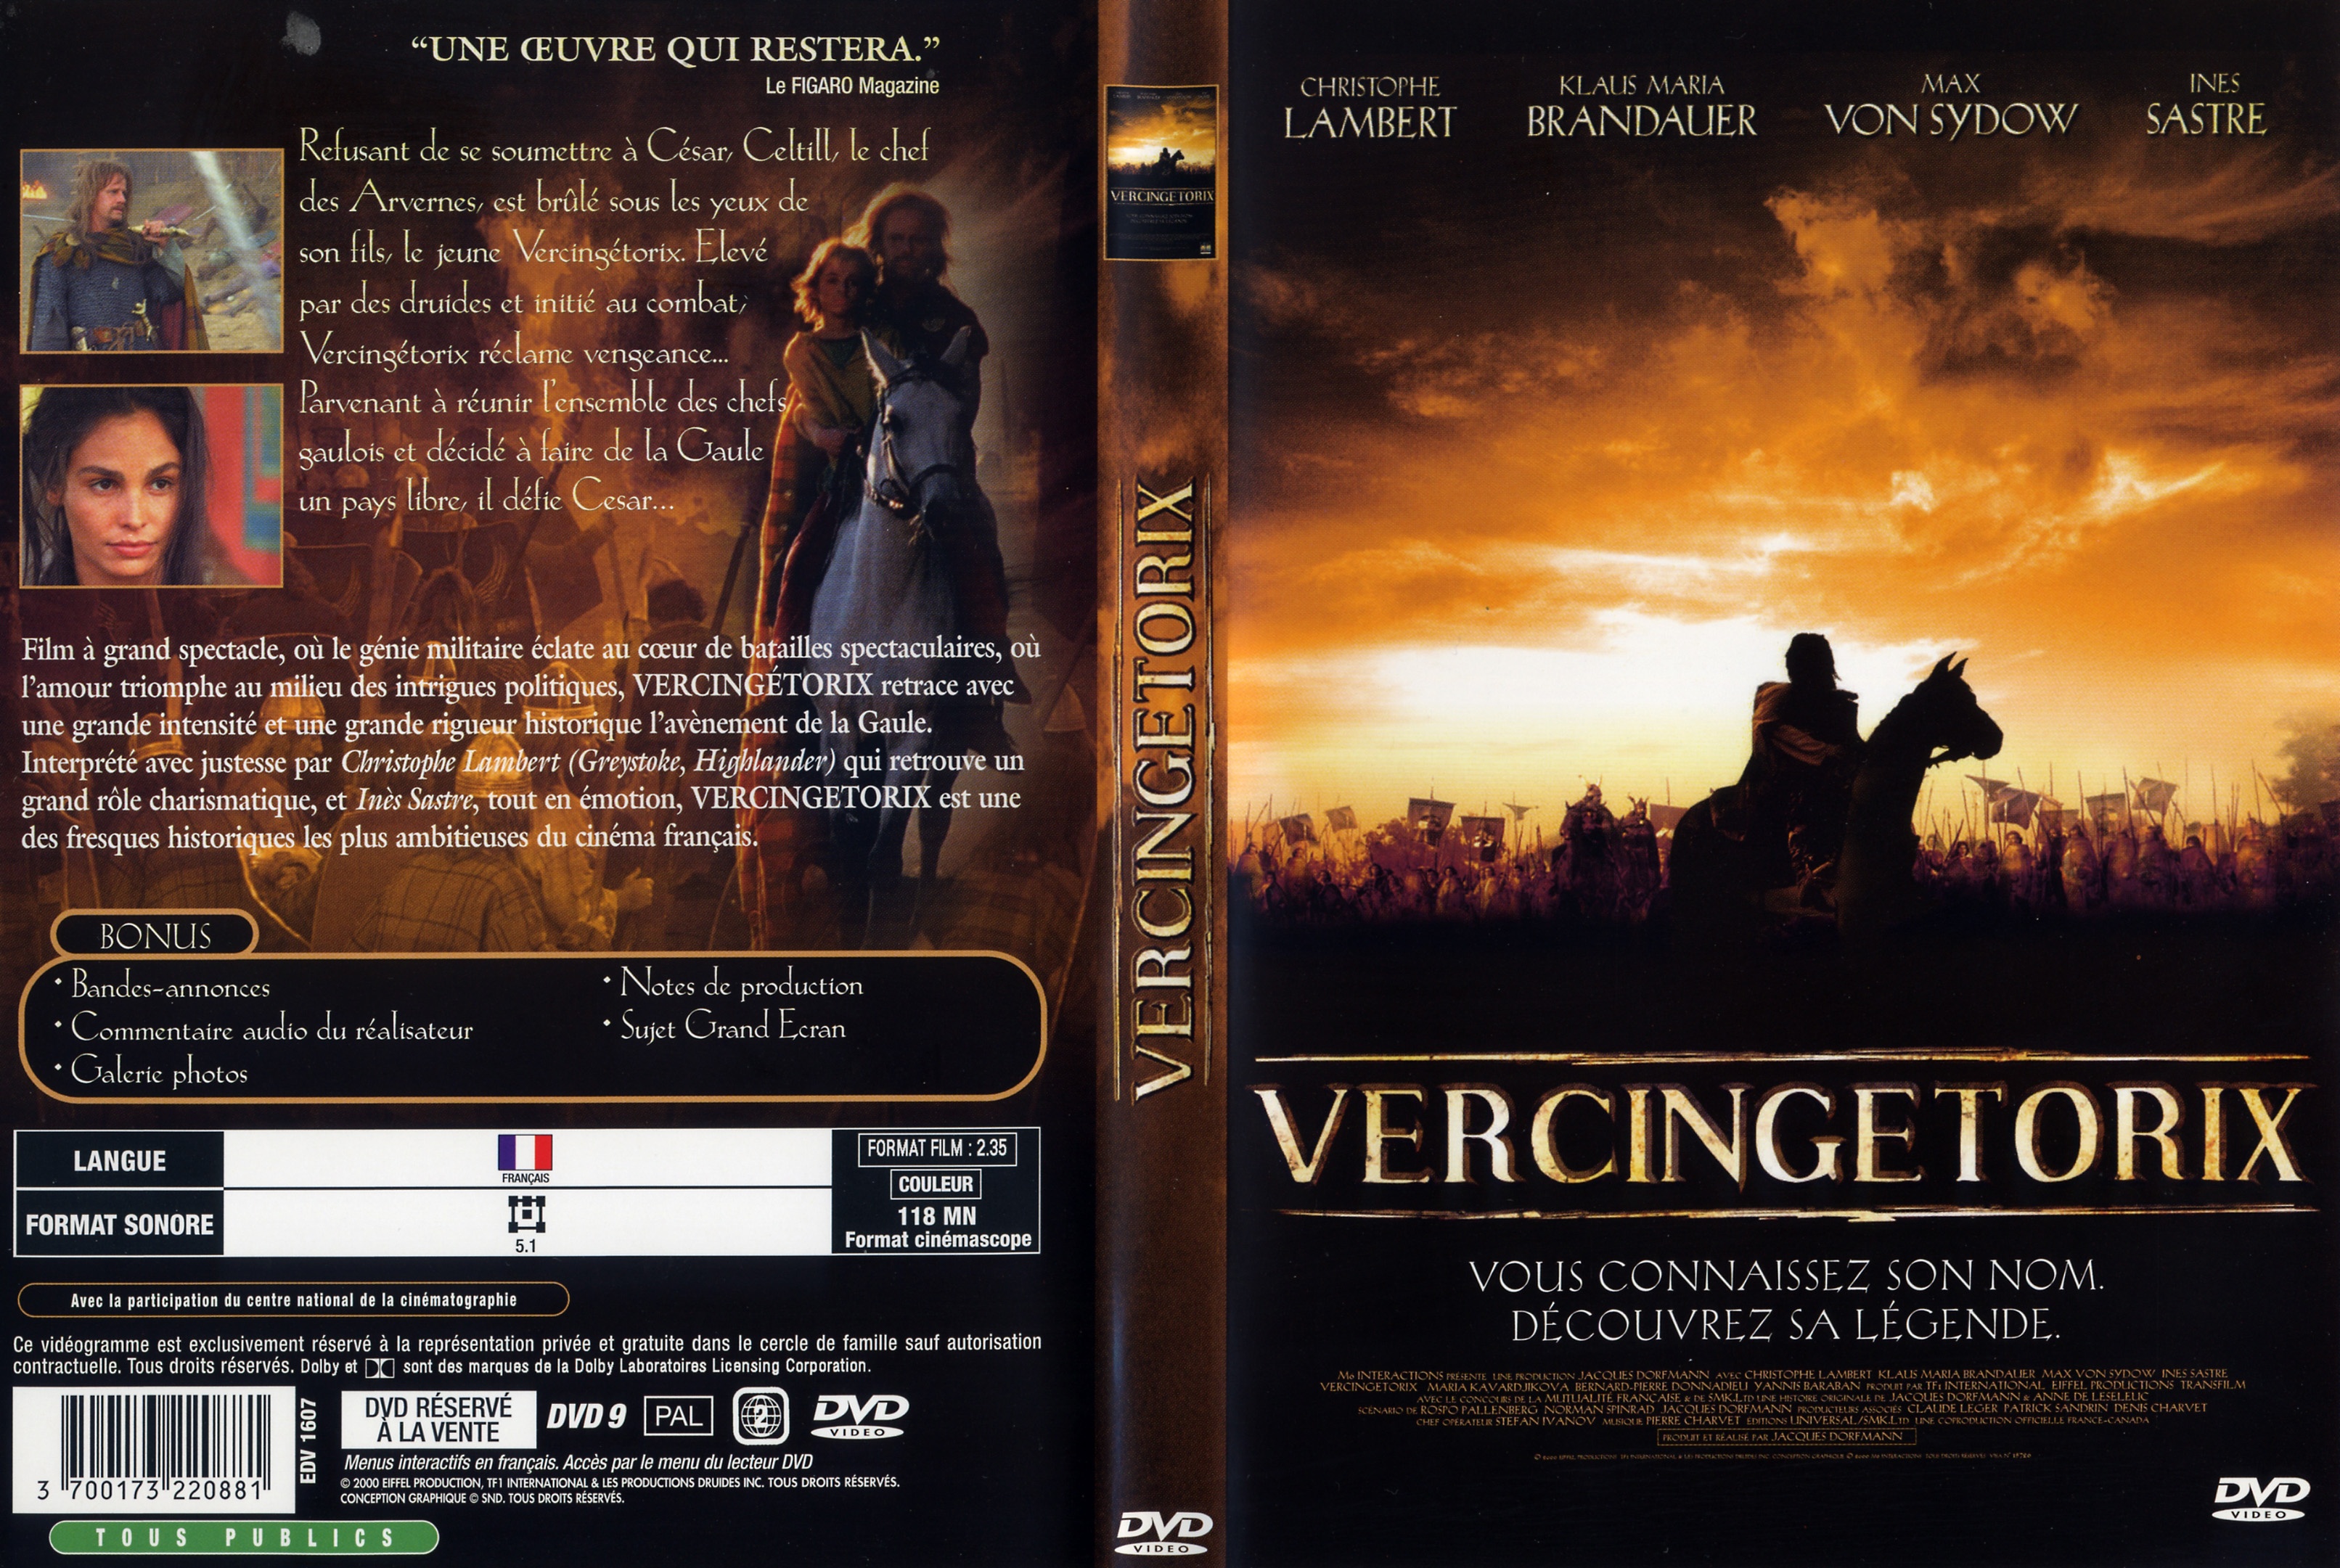 Jaquette DVD Vercingetorix v2